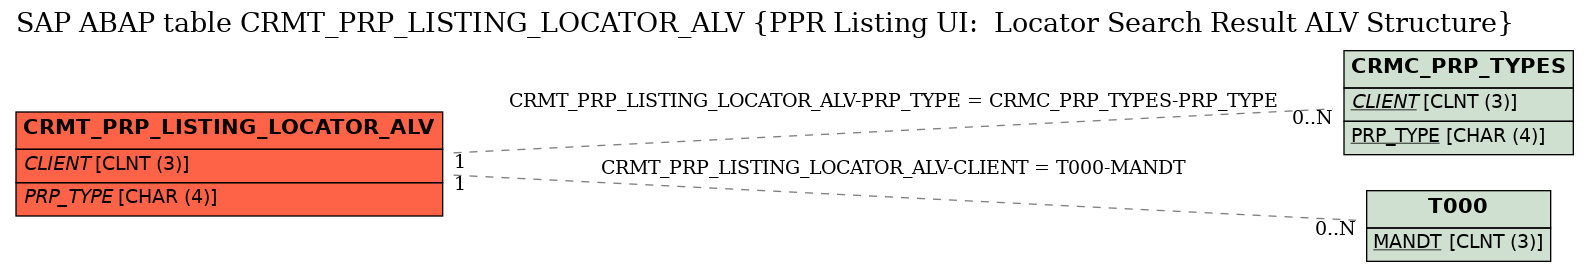 E-R Diagram for table CRMT_PRP_LISTING_LOCATOR_ALV (PPR Listing UI:  Locator Search Result ALV Structure)